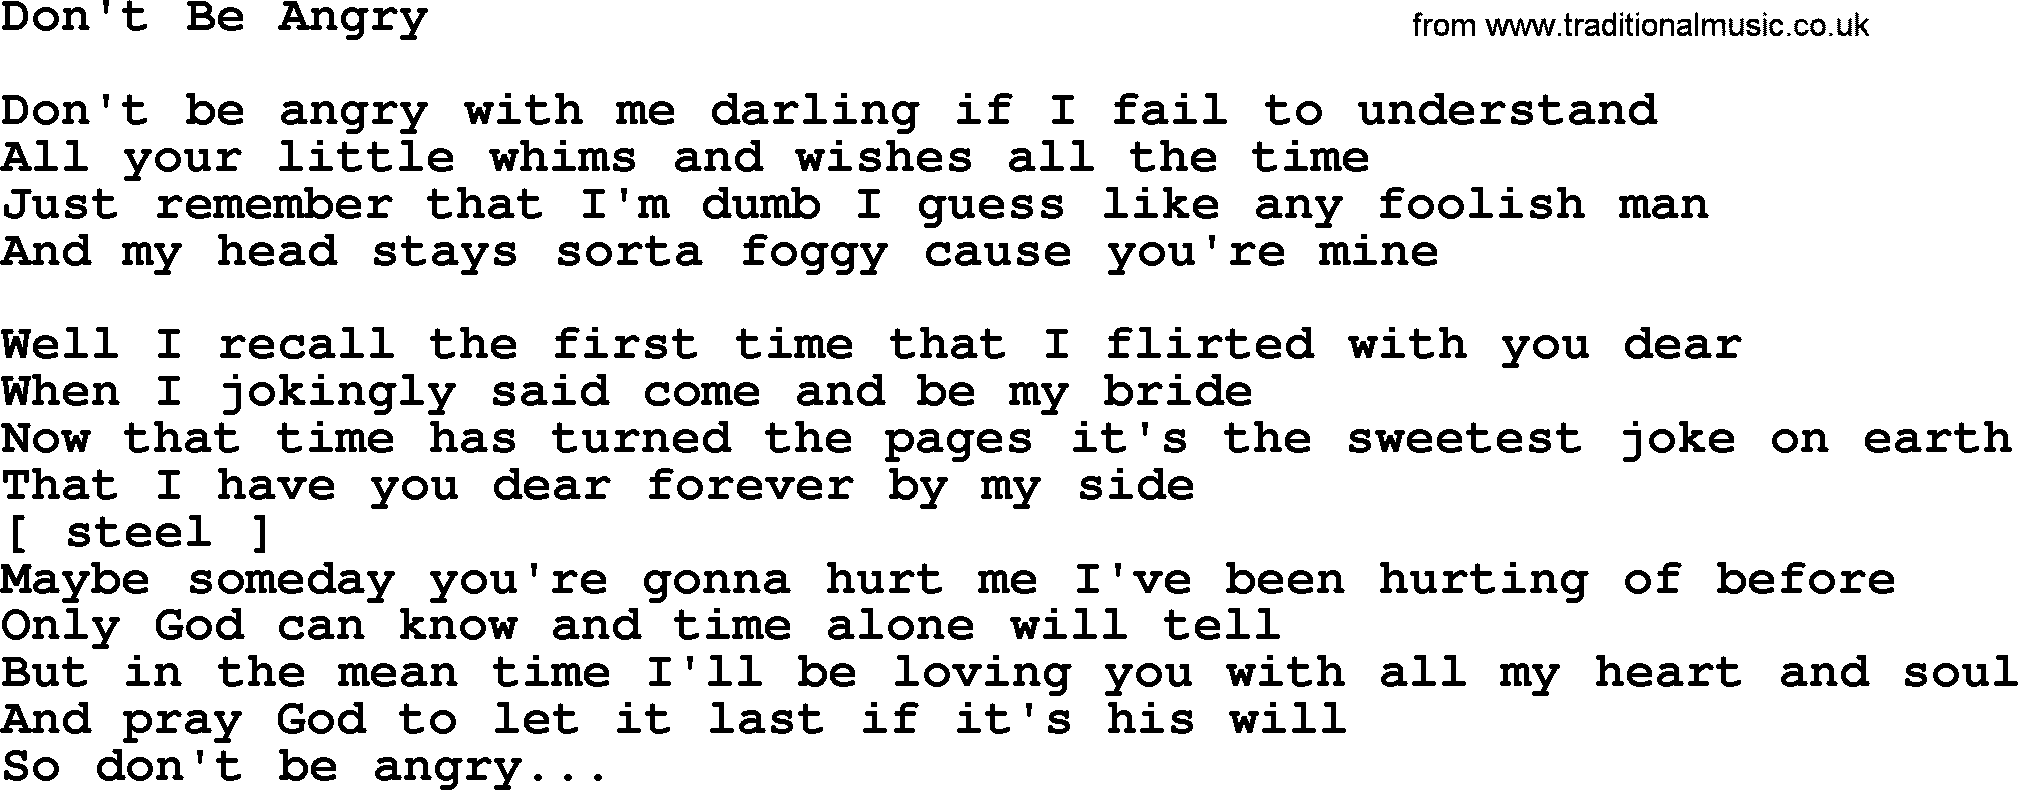 George Jones song: Don't Be Angry, lyrics